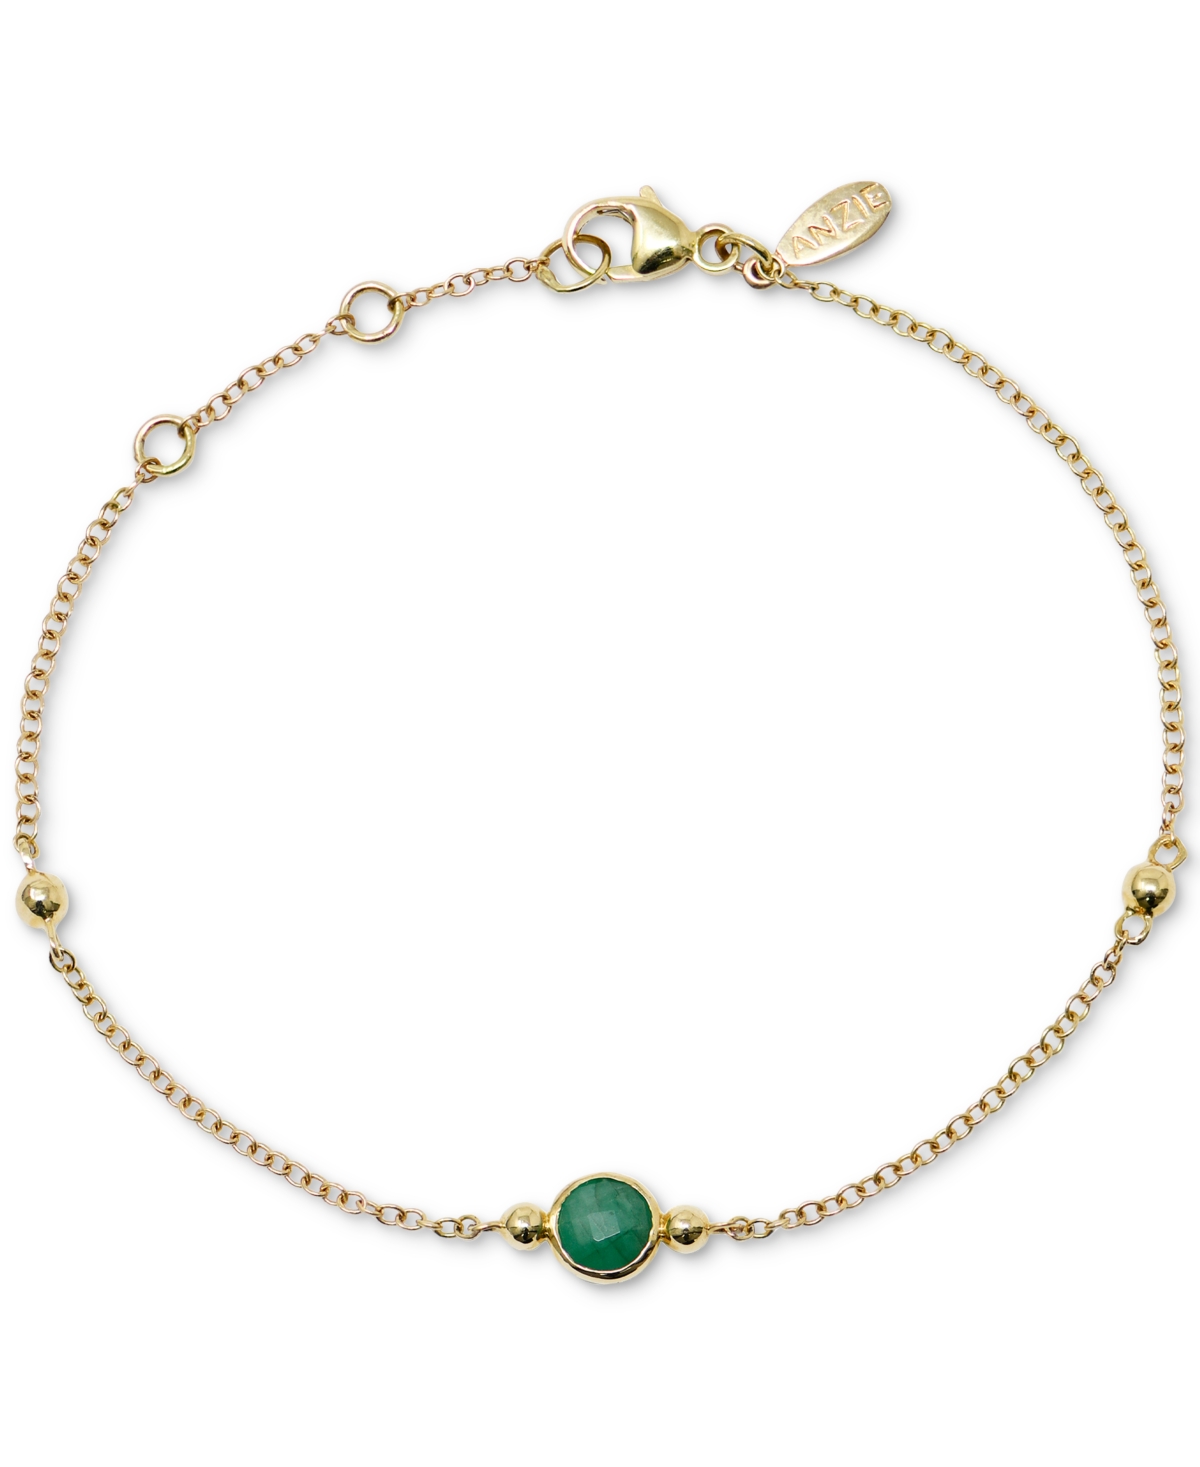 Emerald & Bead Chain Link Bracelet in 14k Gold - Gold